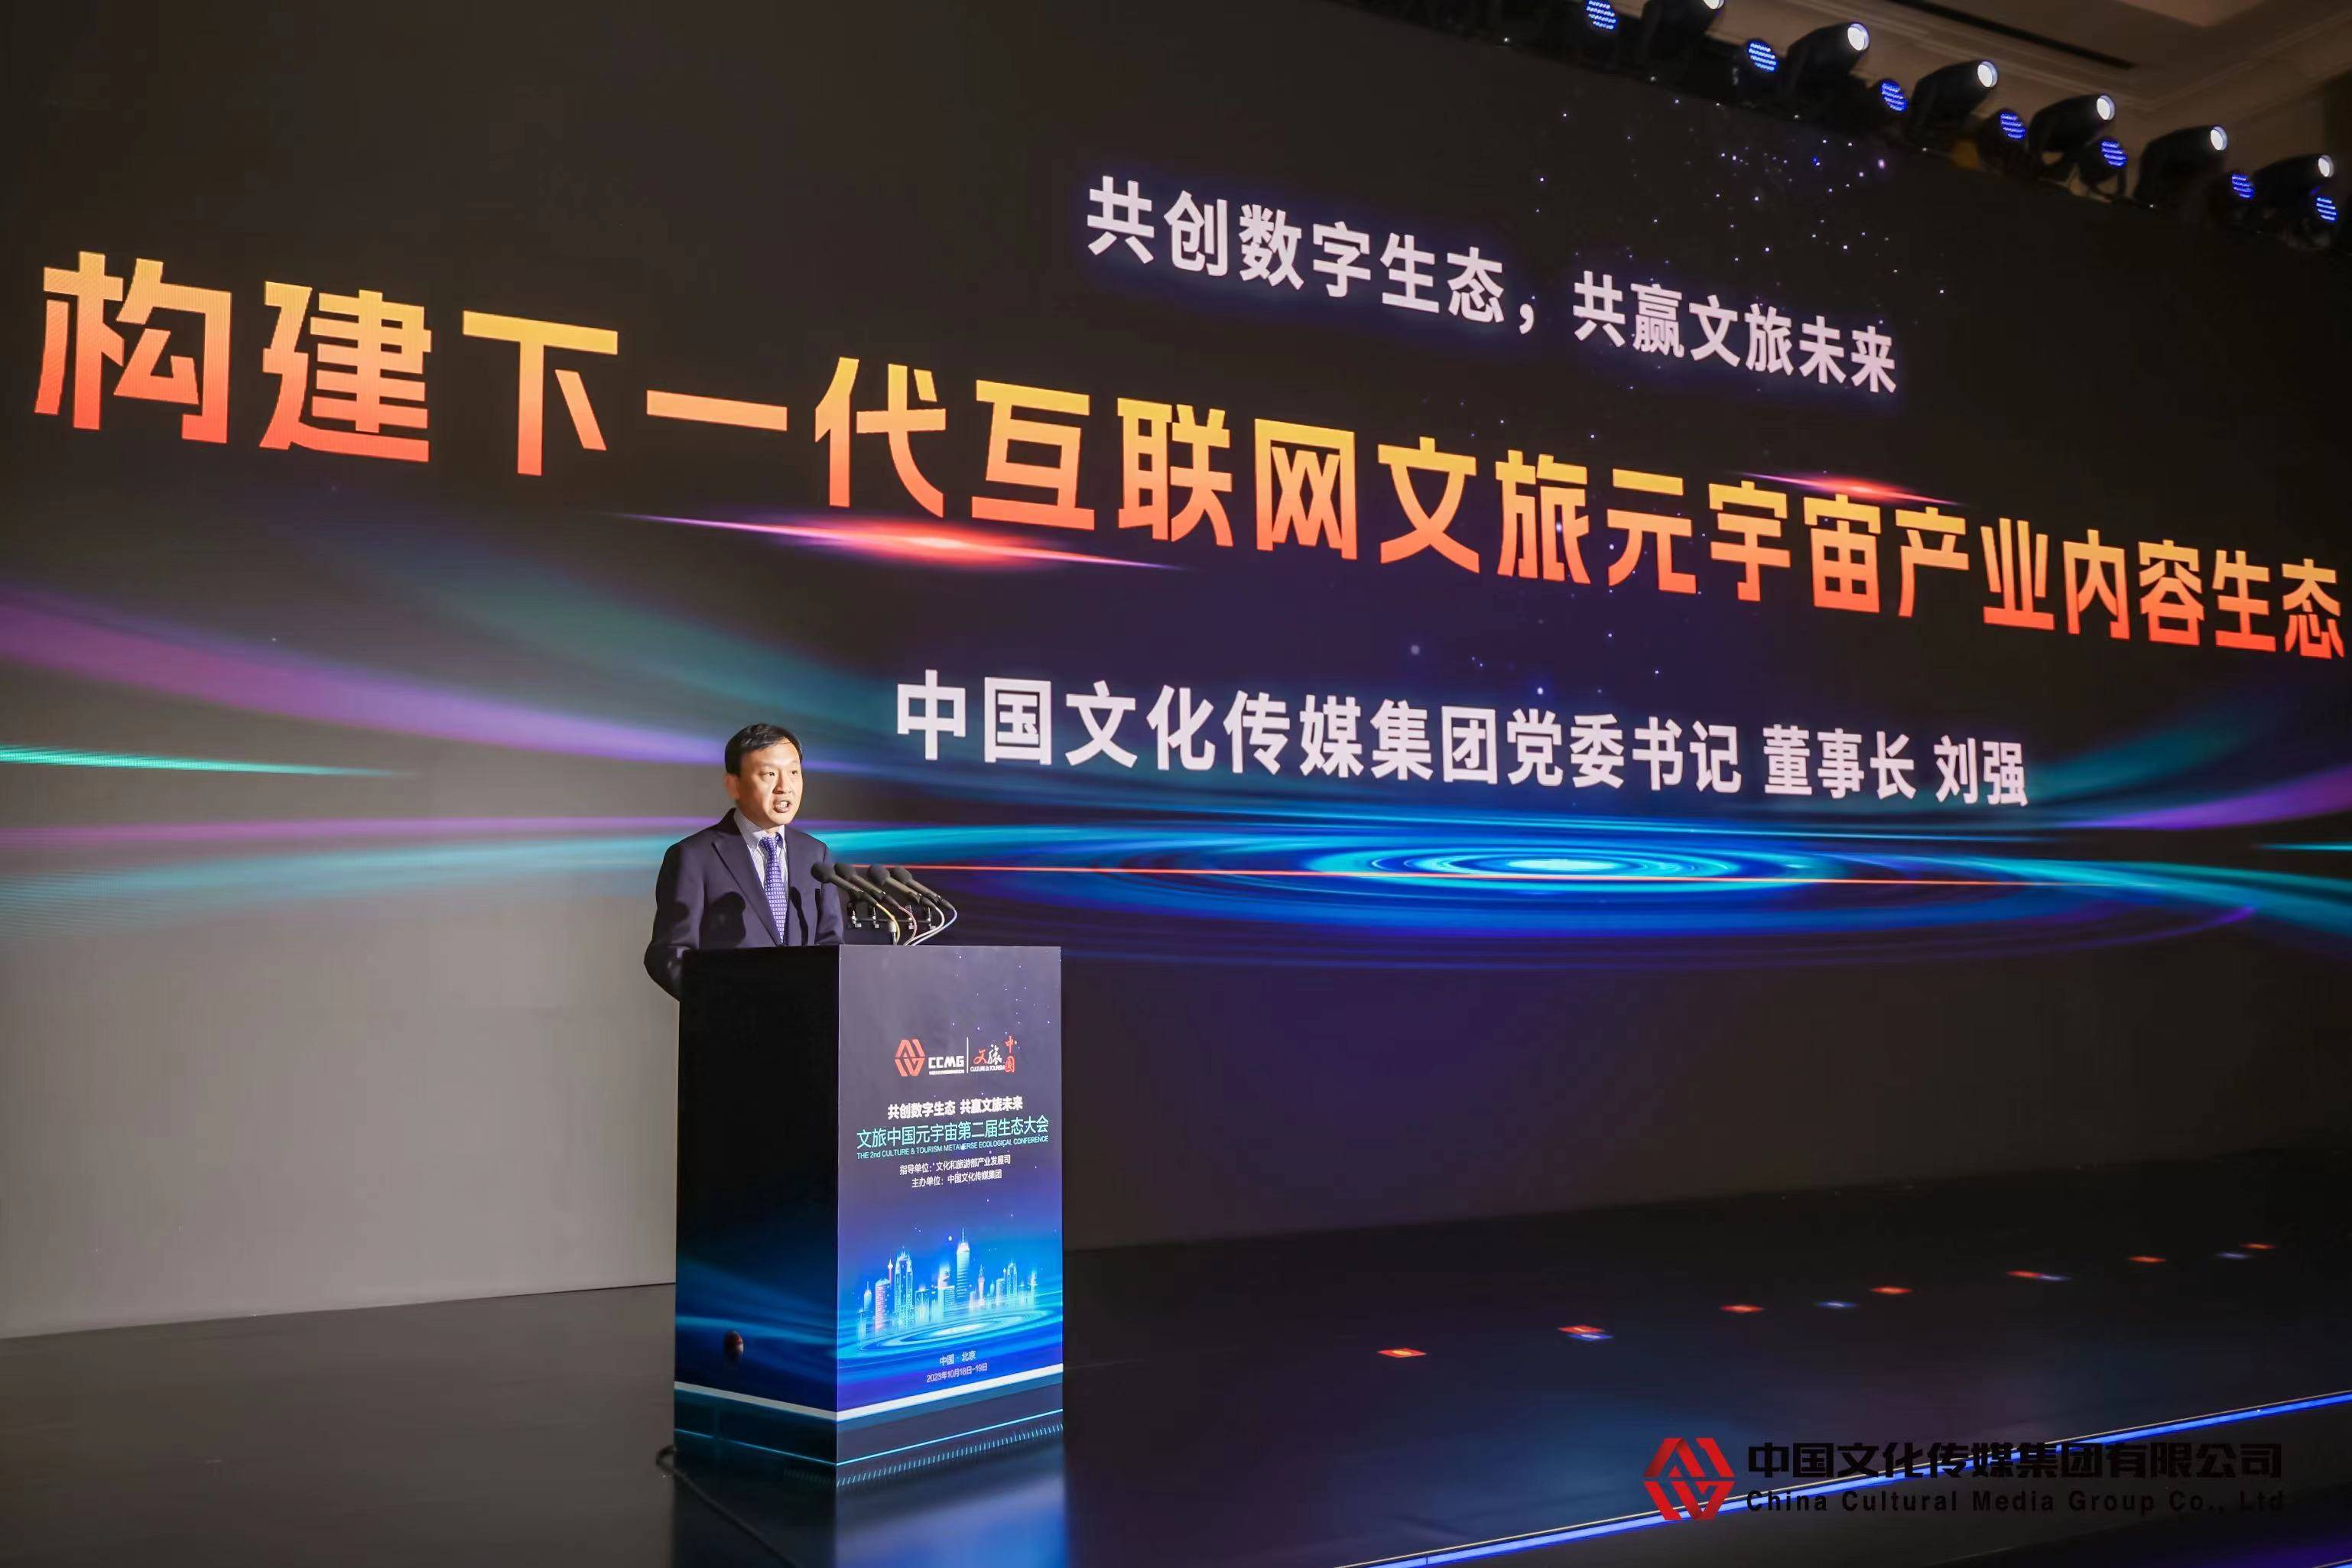 Liu Qiang: 次世代のインターネット文化観光メタバース産業コンテンツ エコシステムの構築